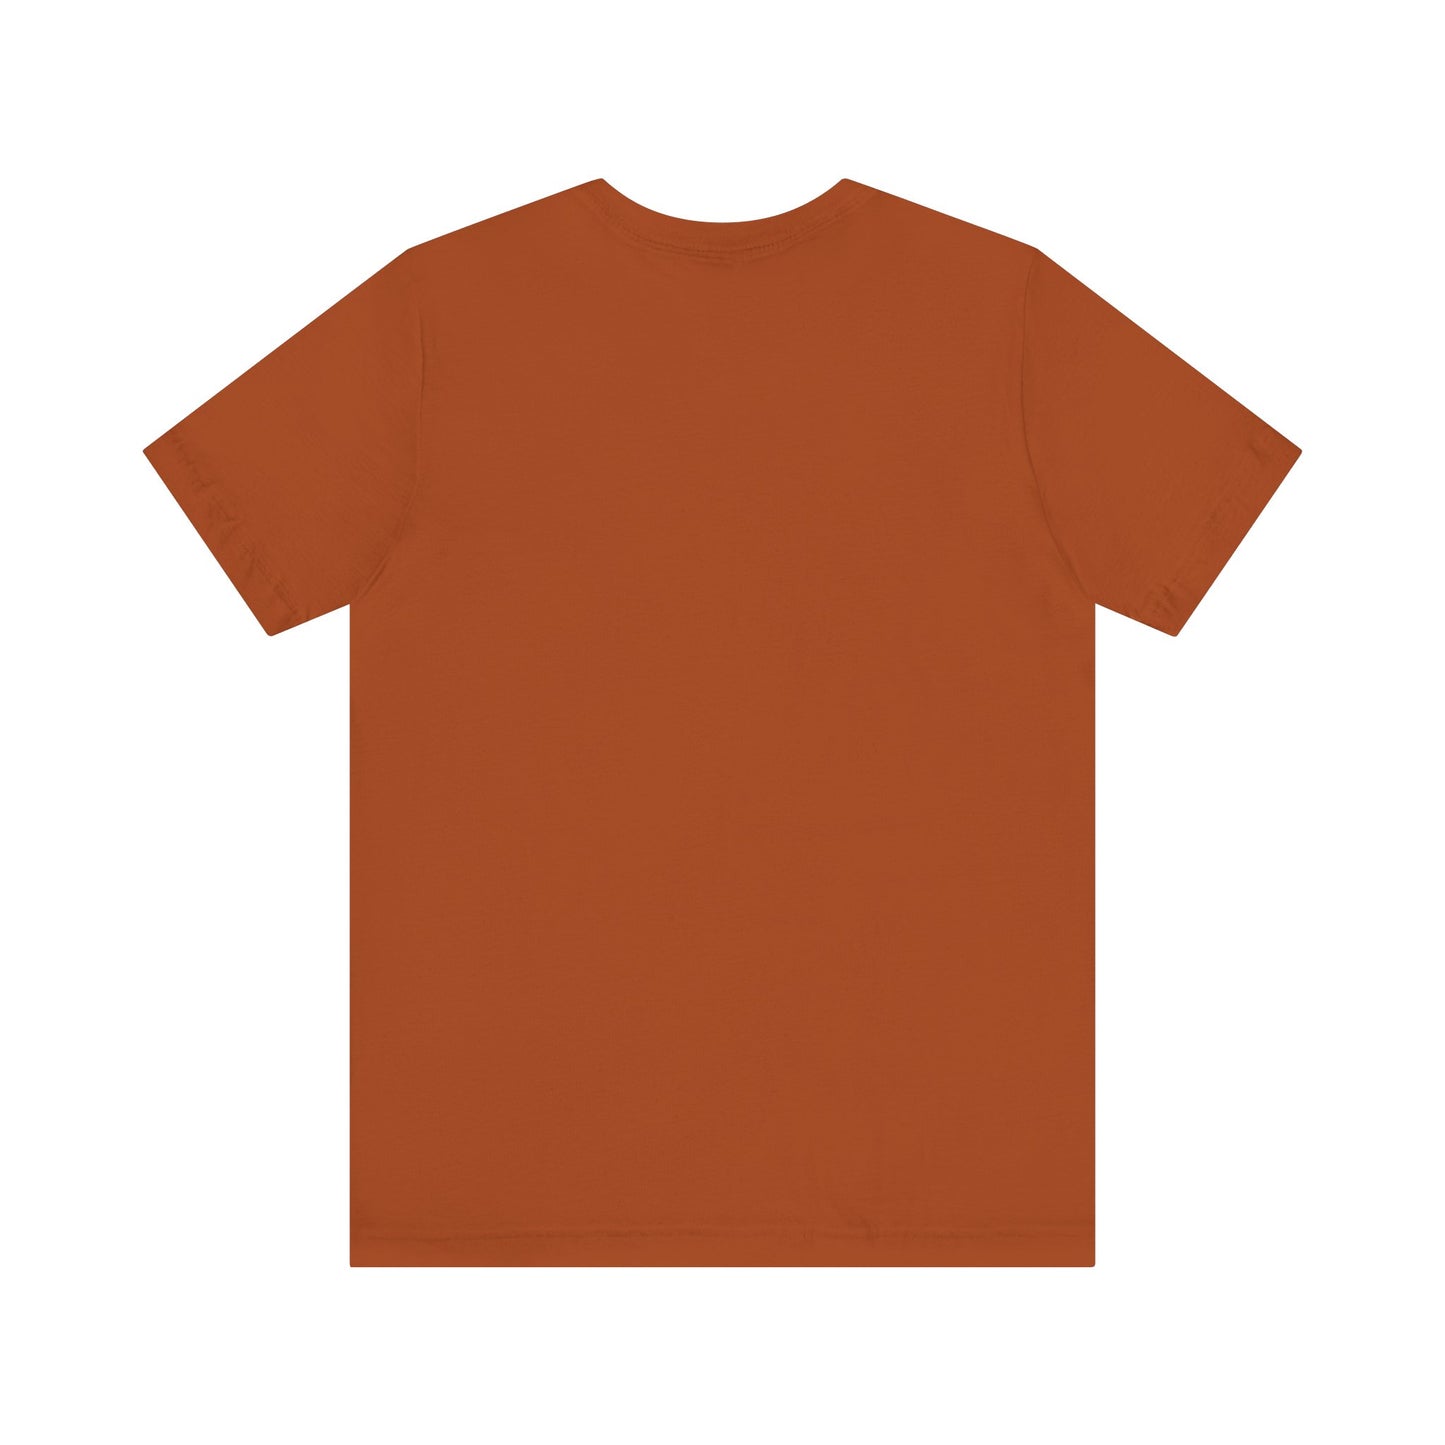 Solid Orange. Unisex Jersey Short Sleeve Tee